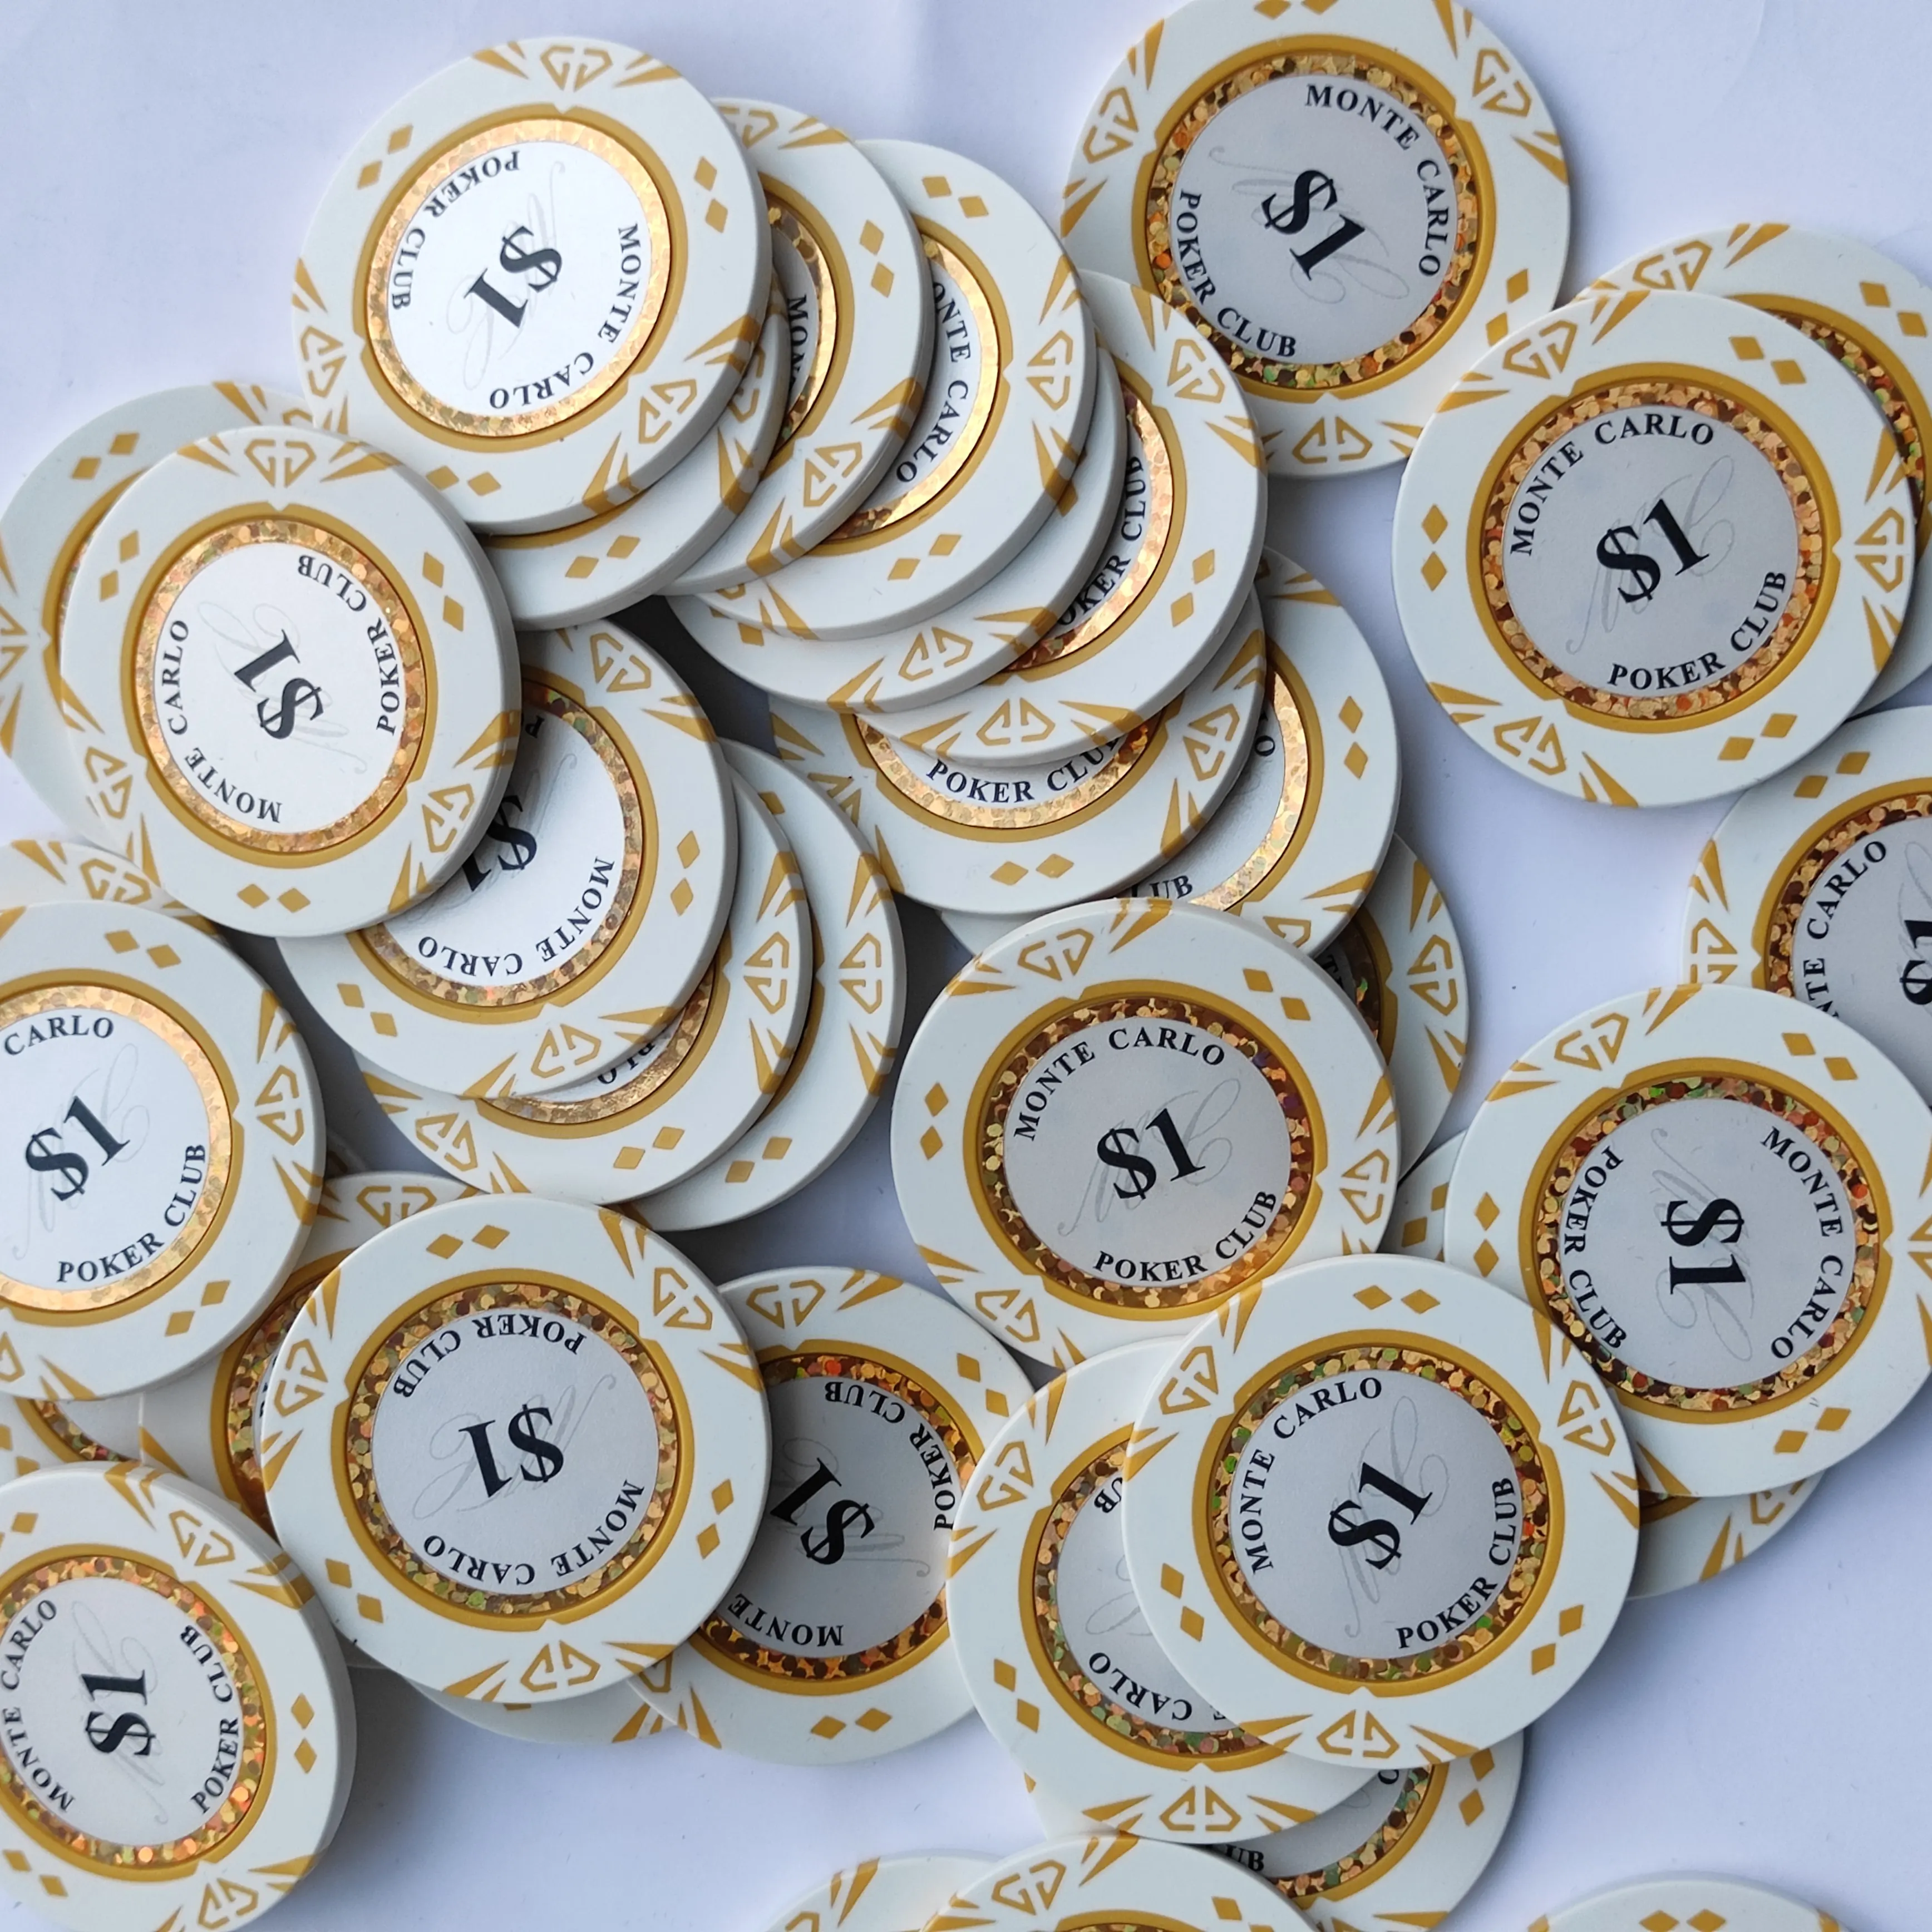 100pcs 14g Monte Carlo Poker Club Casino Poker Chips $1000 